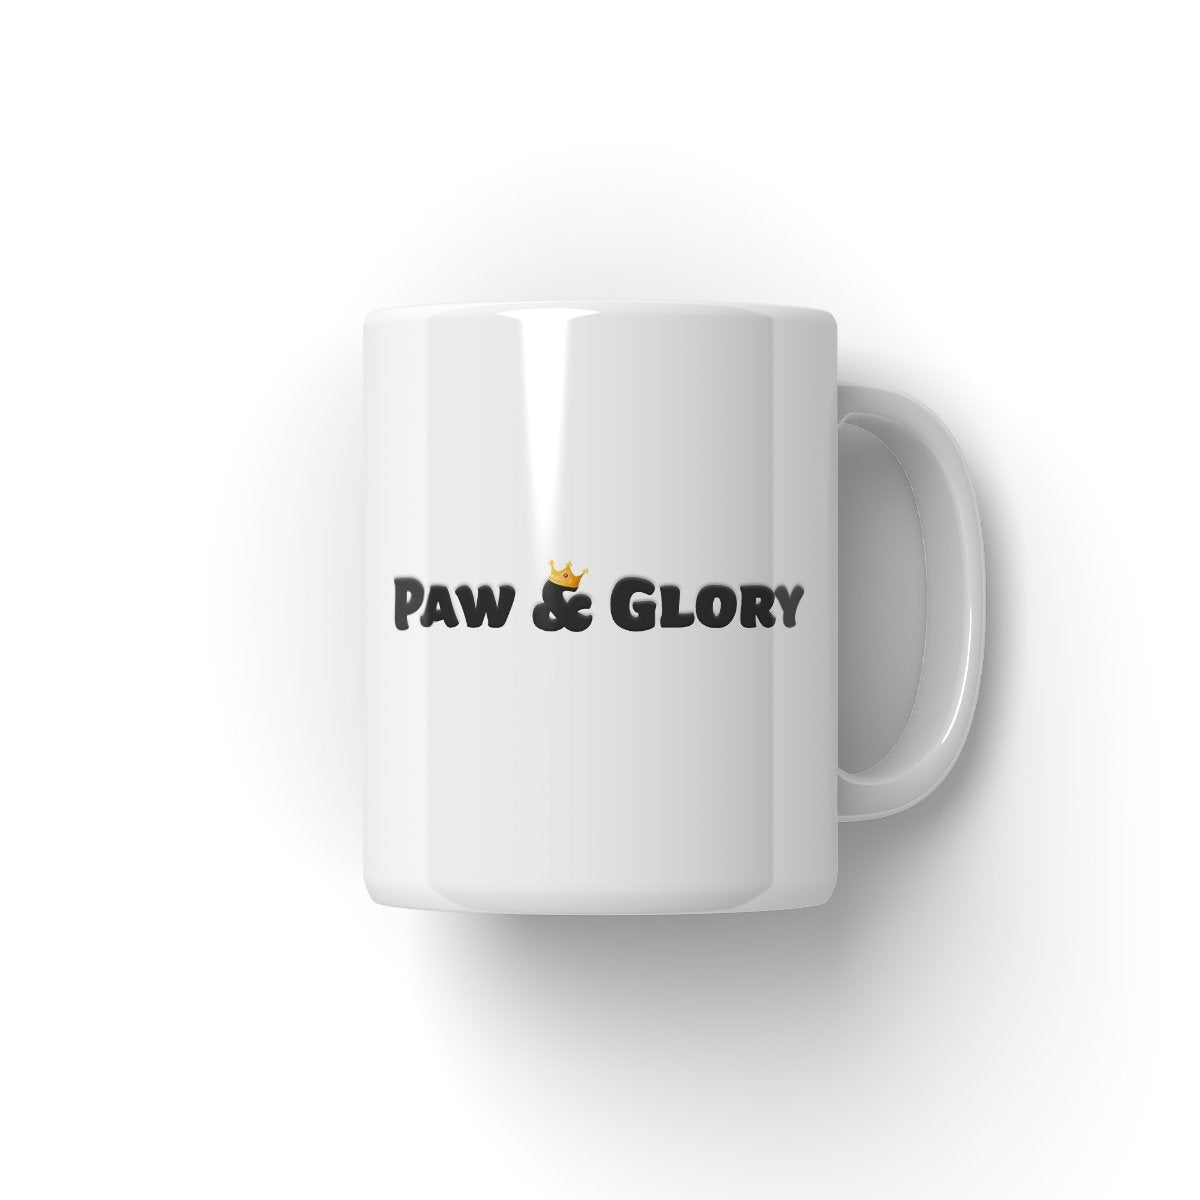 Real Pawdrid Football Club Paw & Glory, pawandglory, personalised coffee mug with cats, personalised pet mugs uk, mug for dog, personalised pet mug portraits, customized dog coffee mugs, personalised pet mugs, Pet Portrait Mug